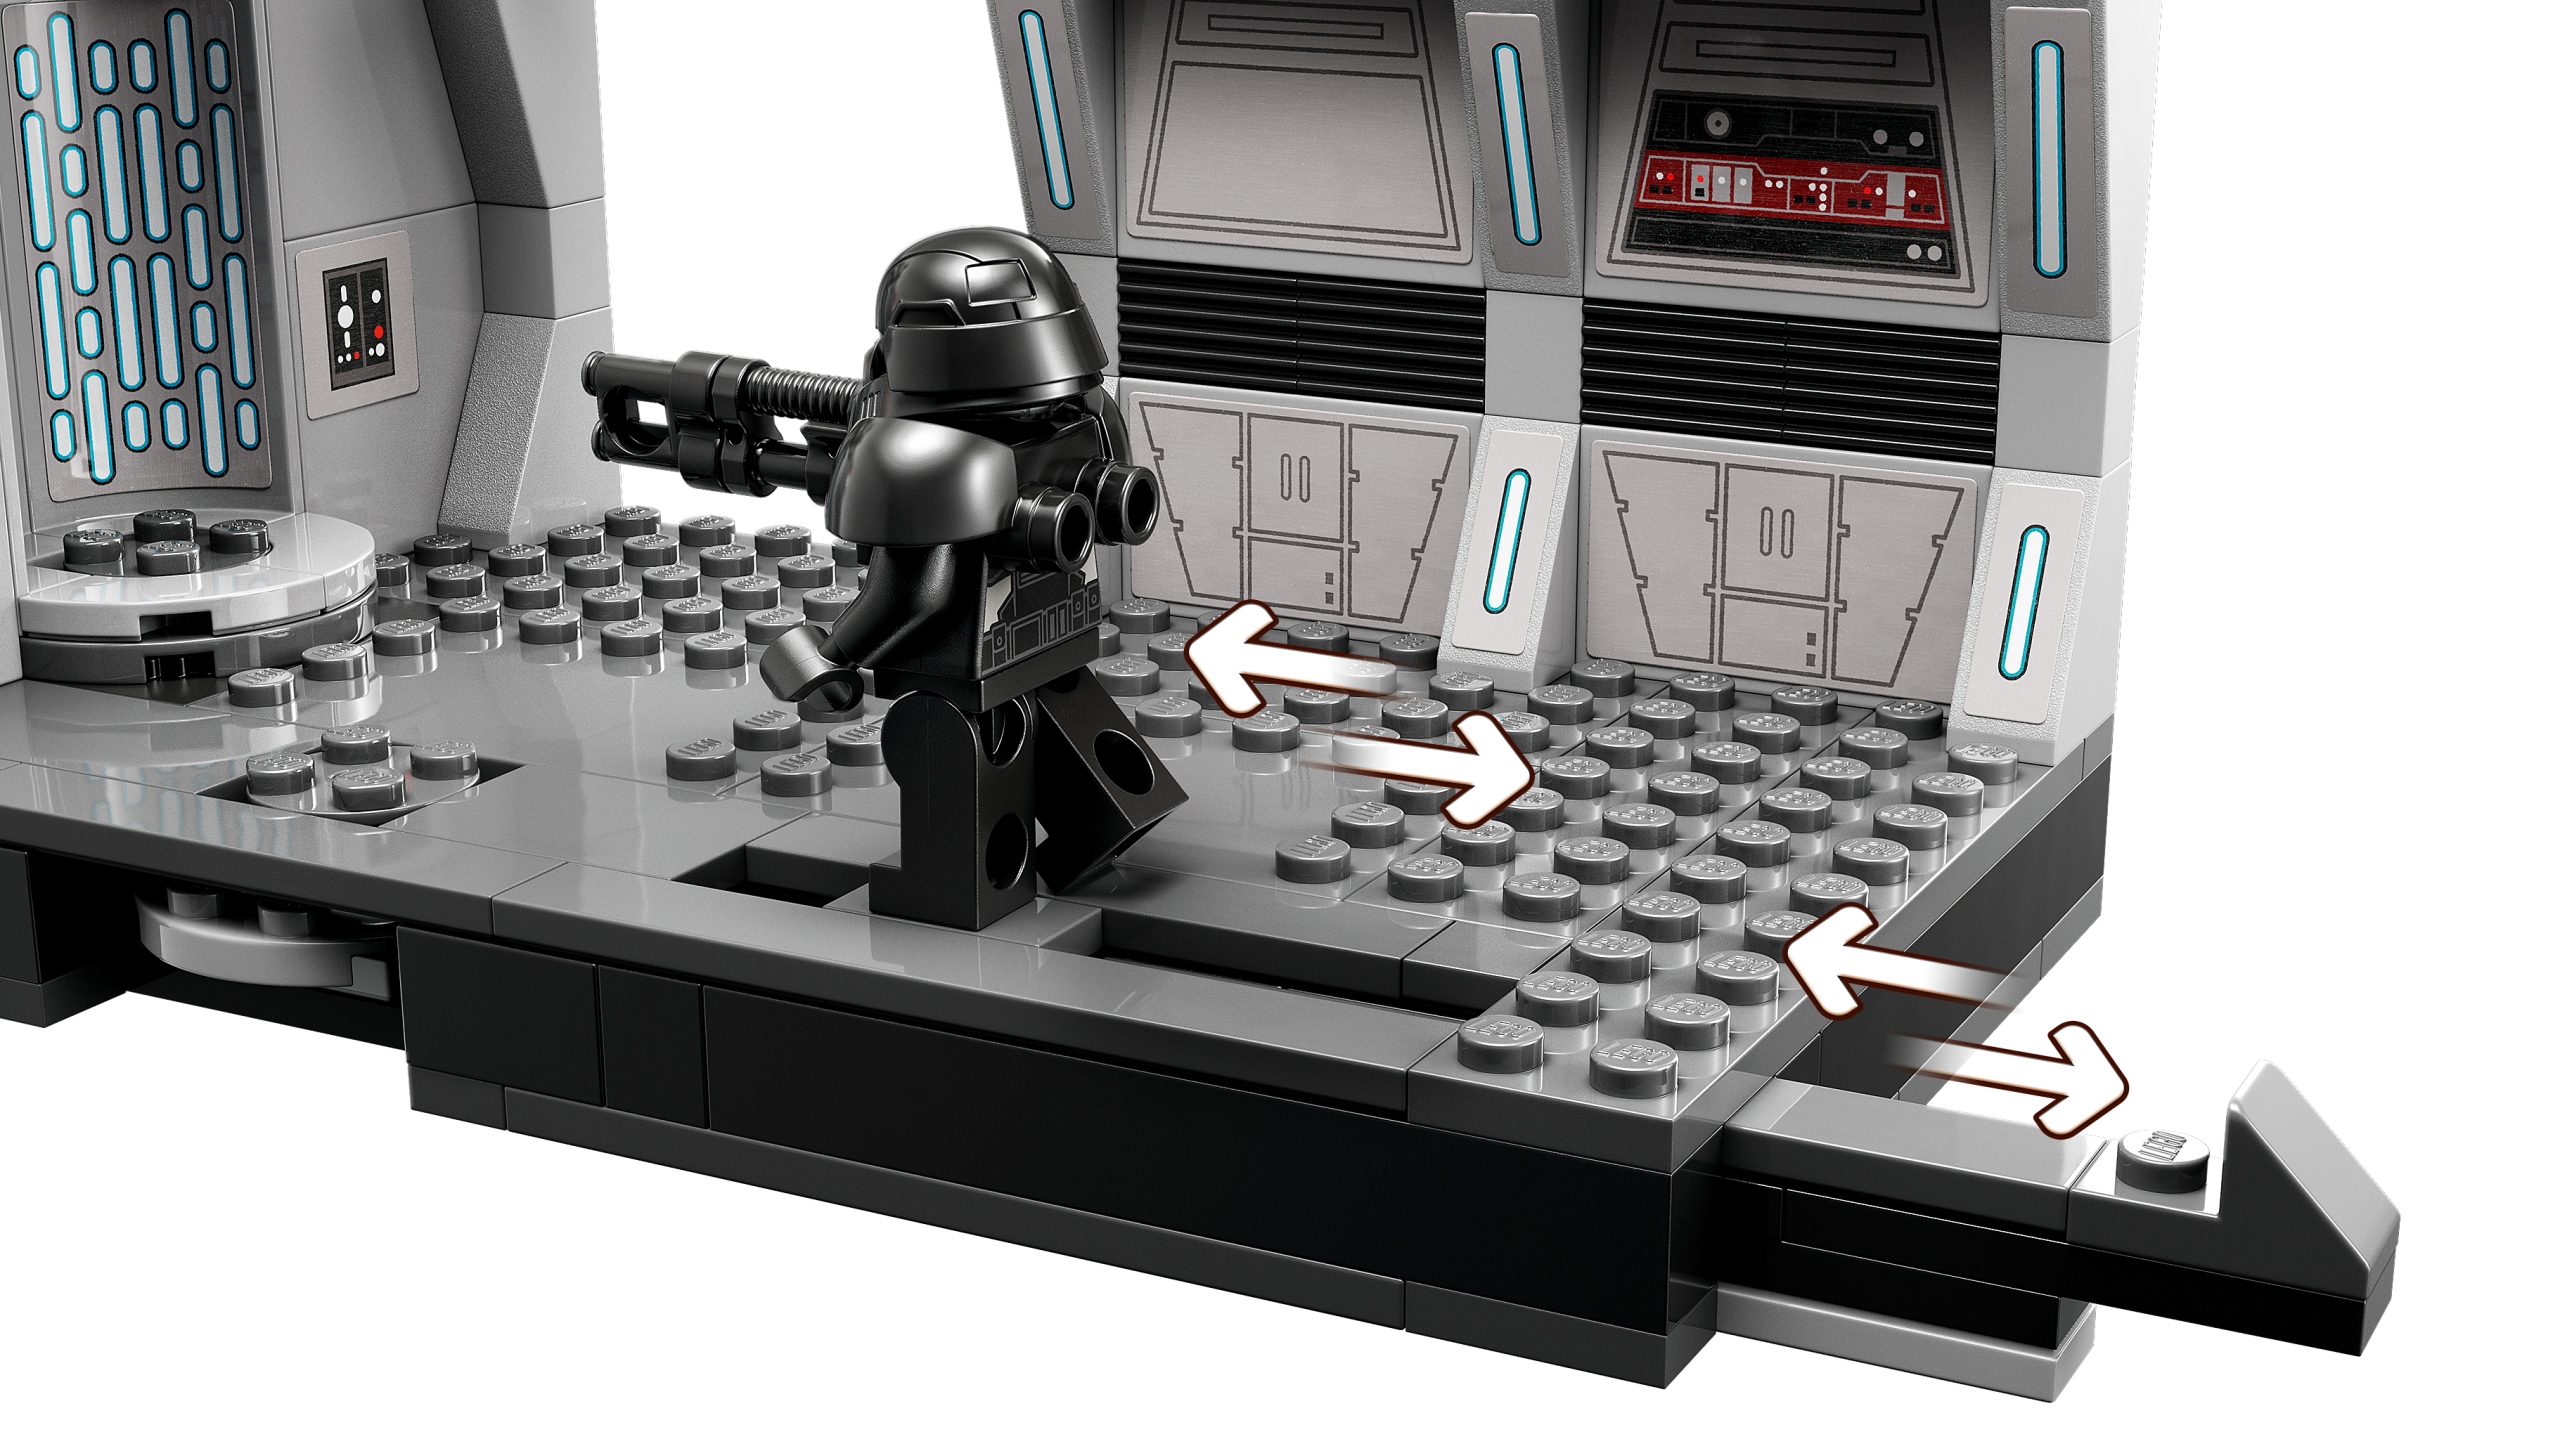 75324 LEGO STAR WARS Dark Stormtrooper Attack 75324 LEGO STAR WARS Назва набору 75324 Dark Stormtrooper Attack